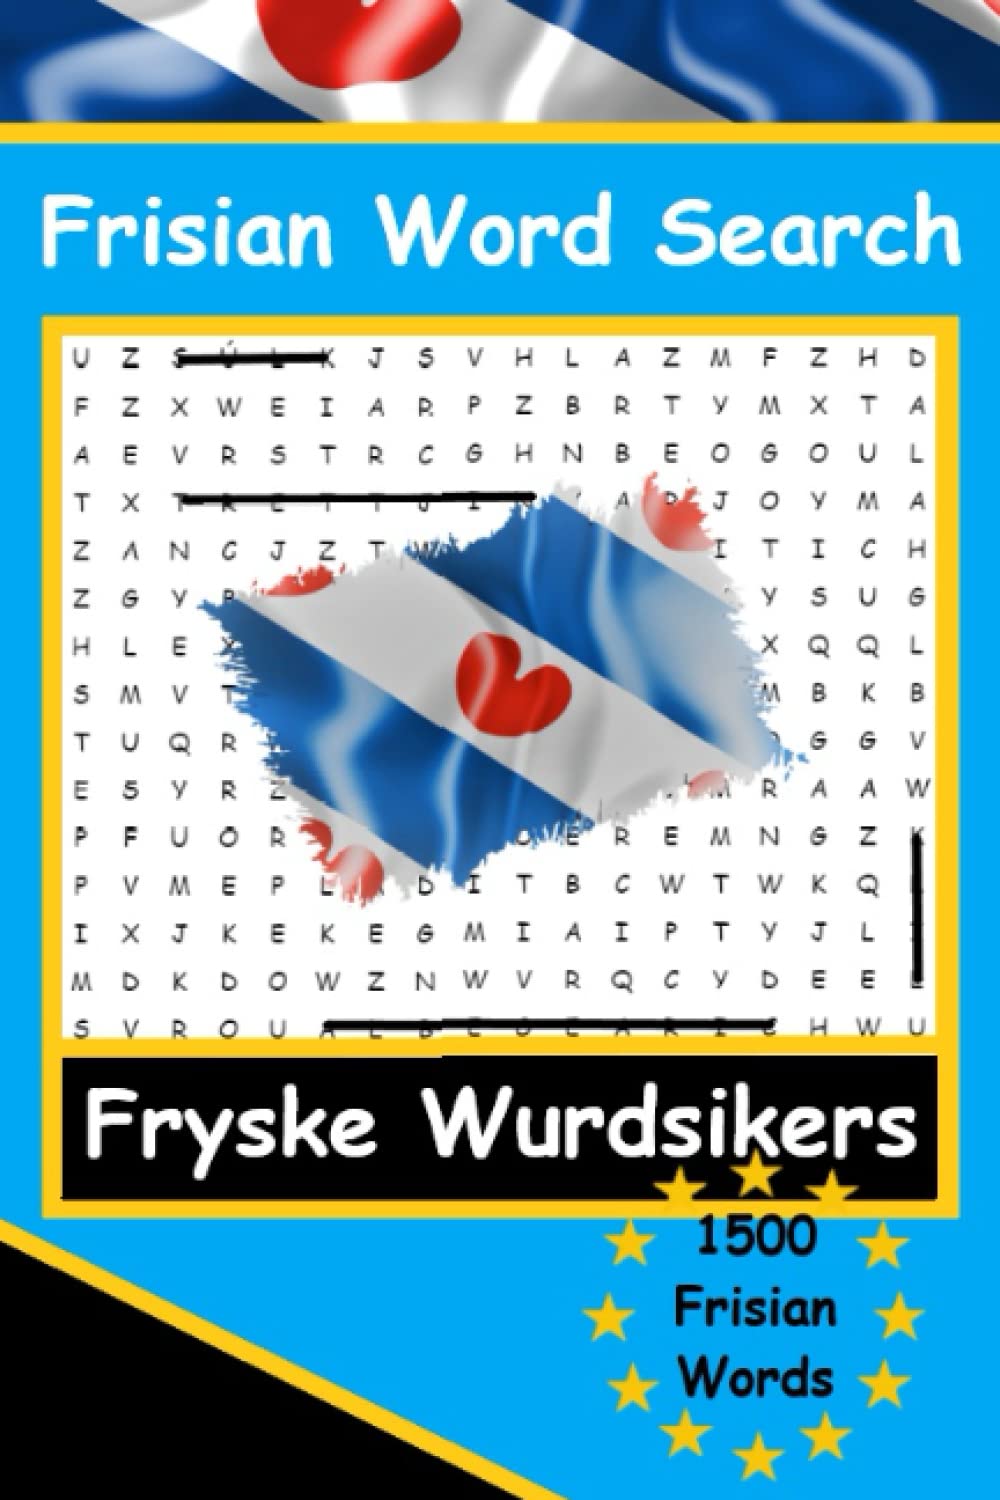 Frisian Word Search Puzzles | A fun way to learn Frisian - Skriuwer.com